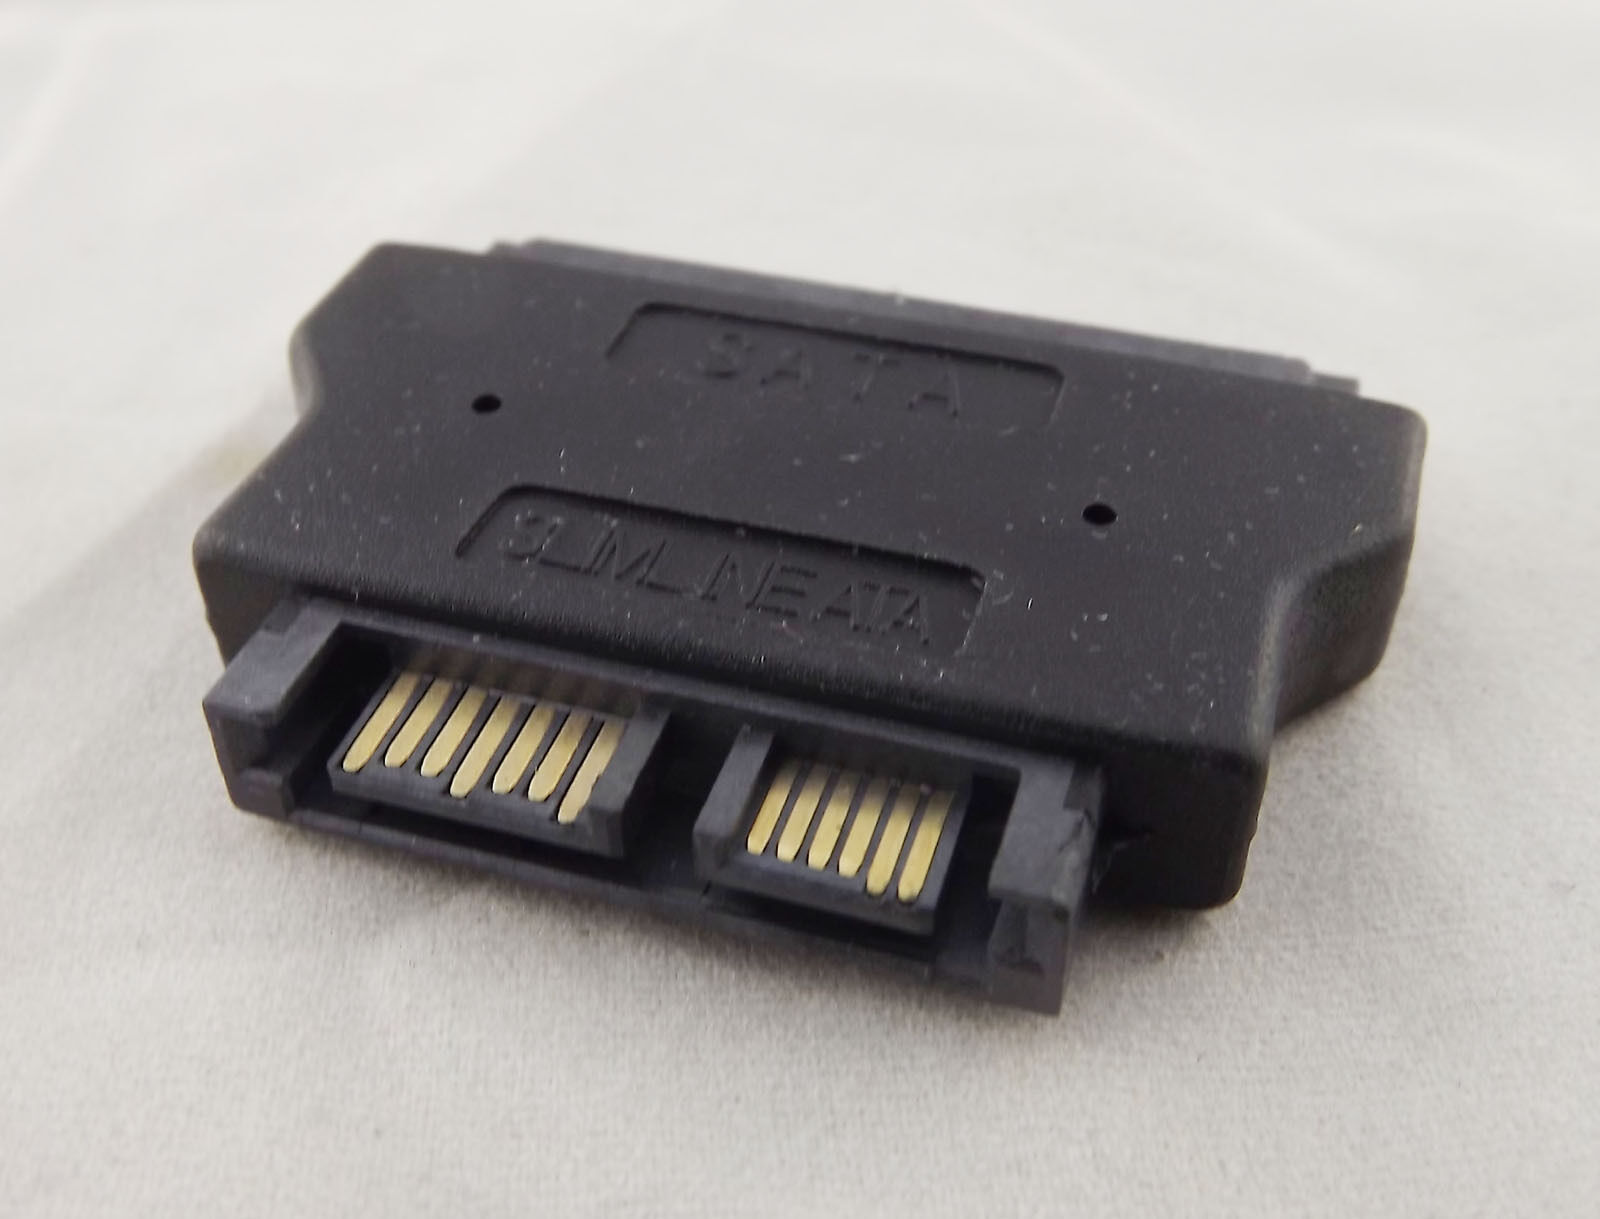 10x SATA 22 Pin Female To ODD Slimline SATA 13 Pin Male CD-ROM Convertor Adapter